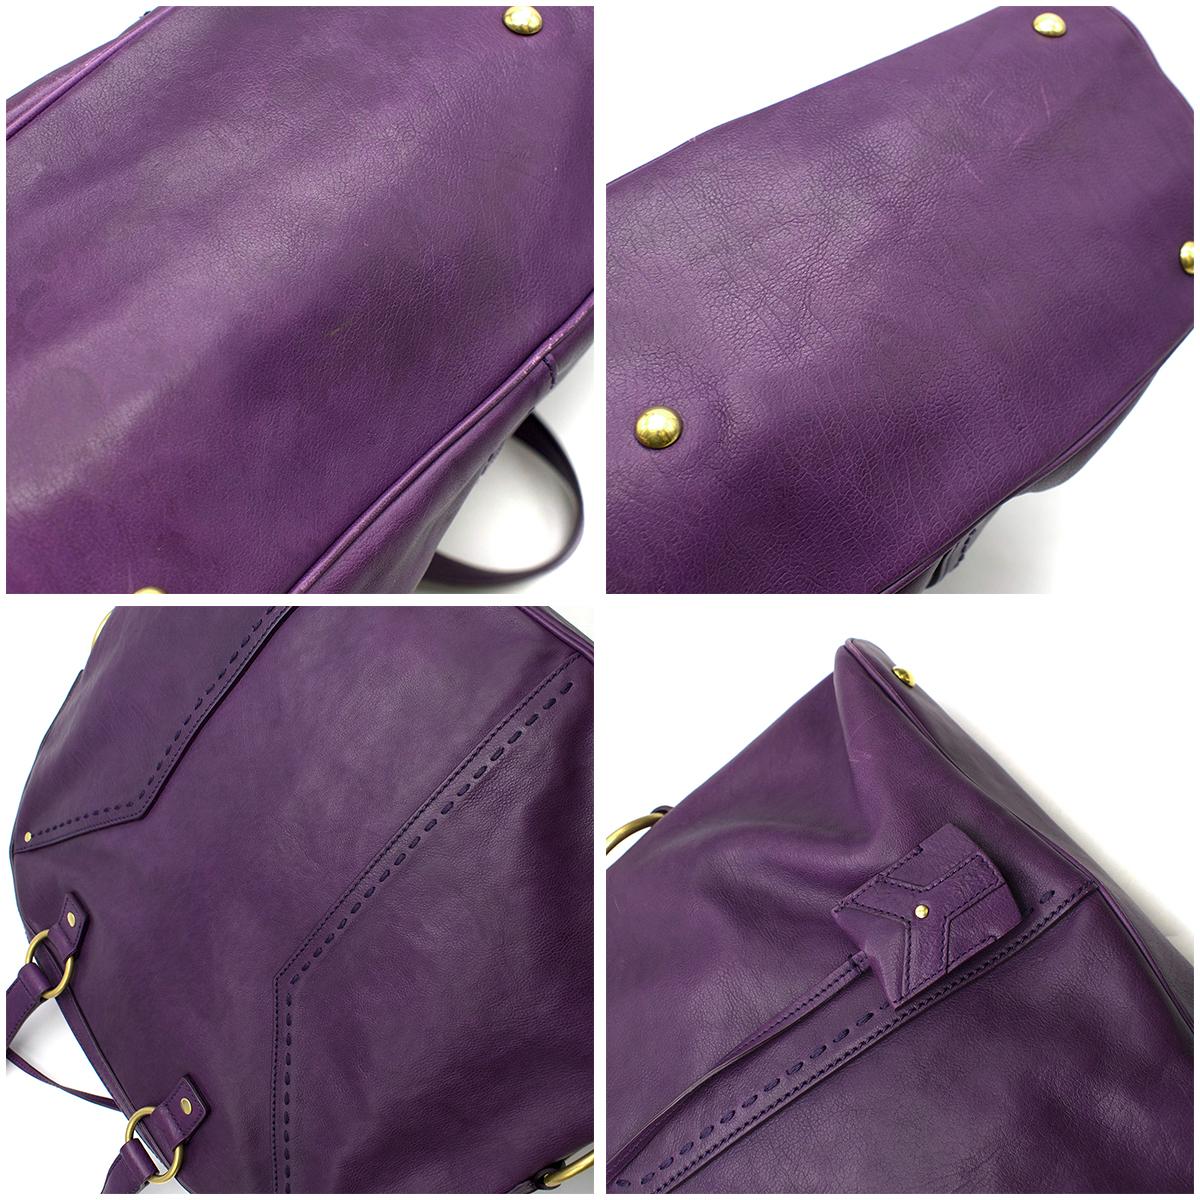 Yves Saint Laurent Purple Leather Muse Bag  1